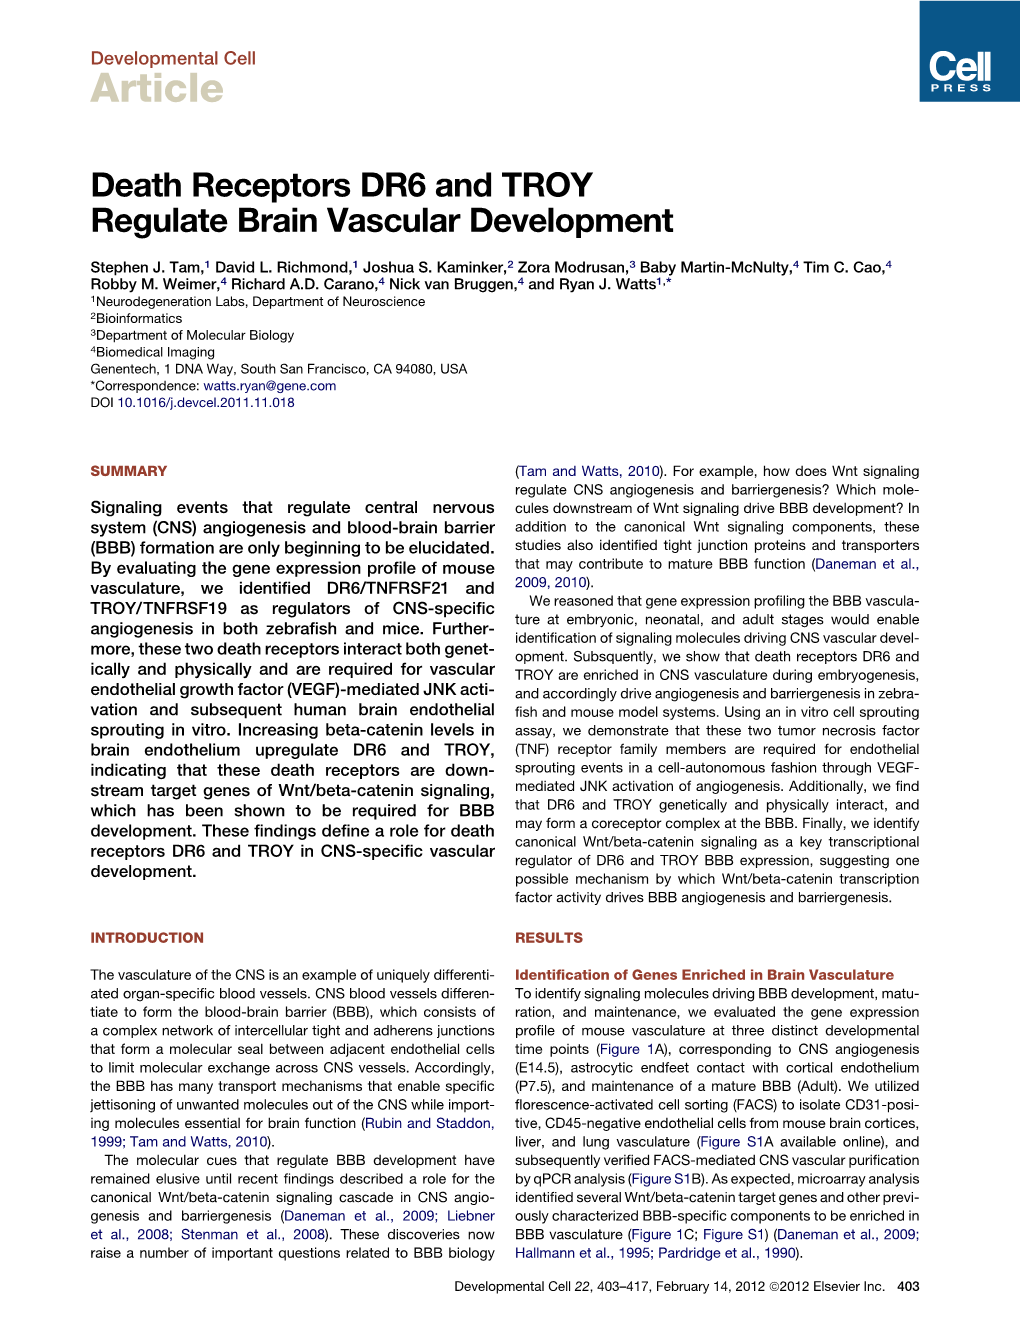 Death Receptors DR6 and TROY Regulate Brain Vascular Development